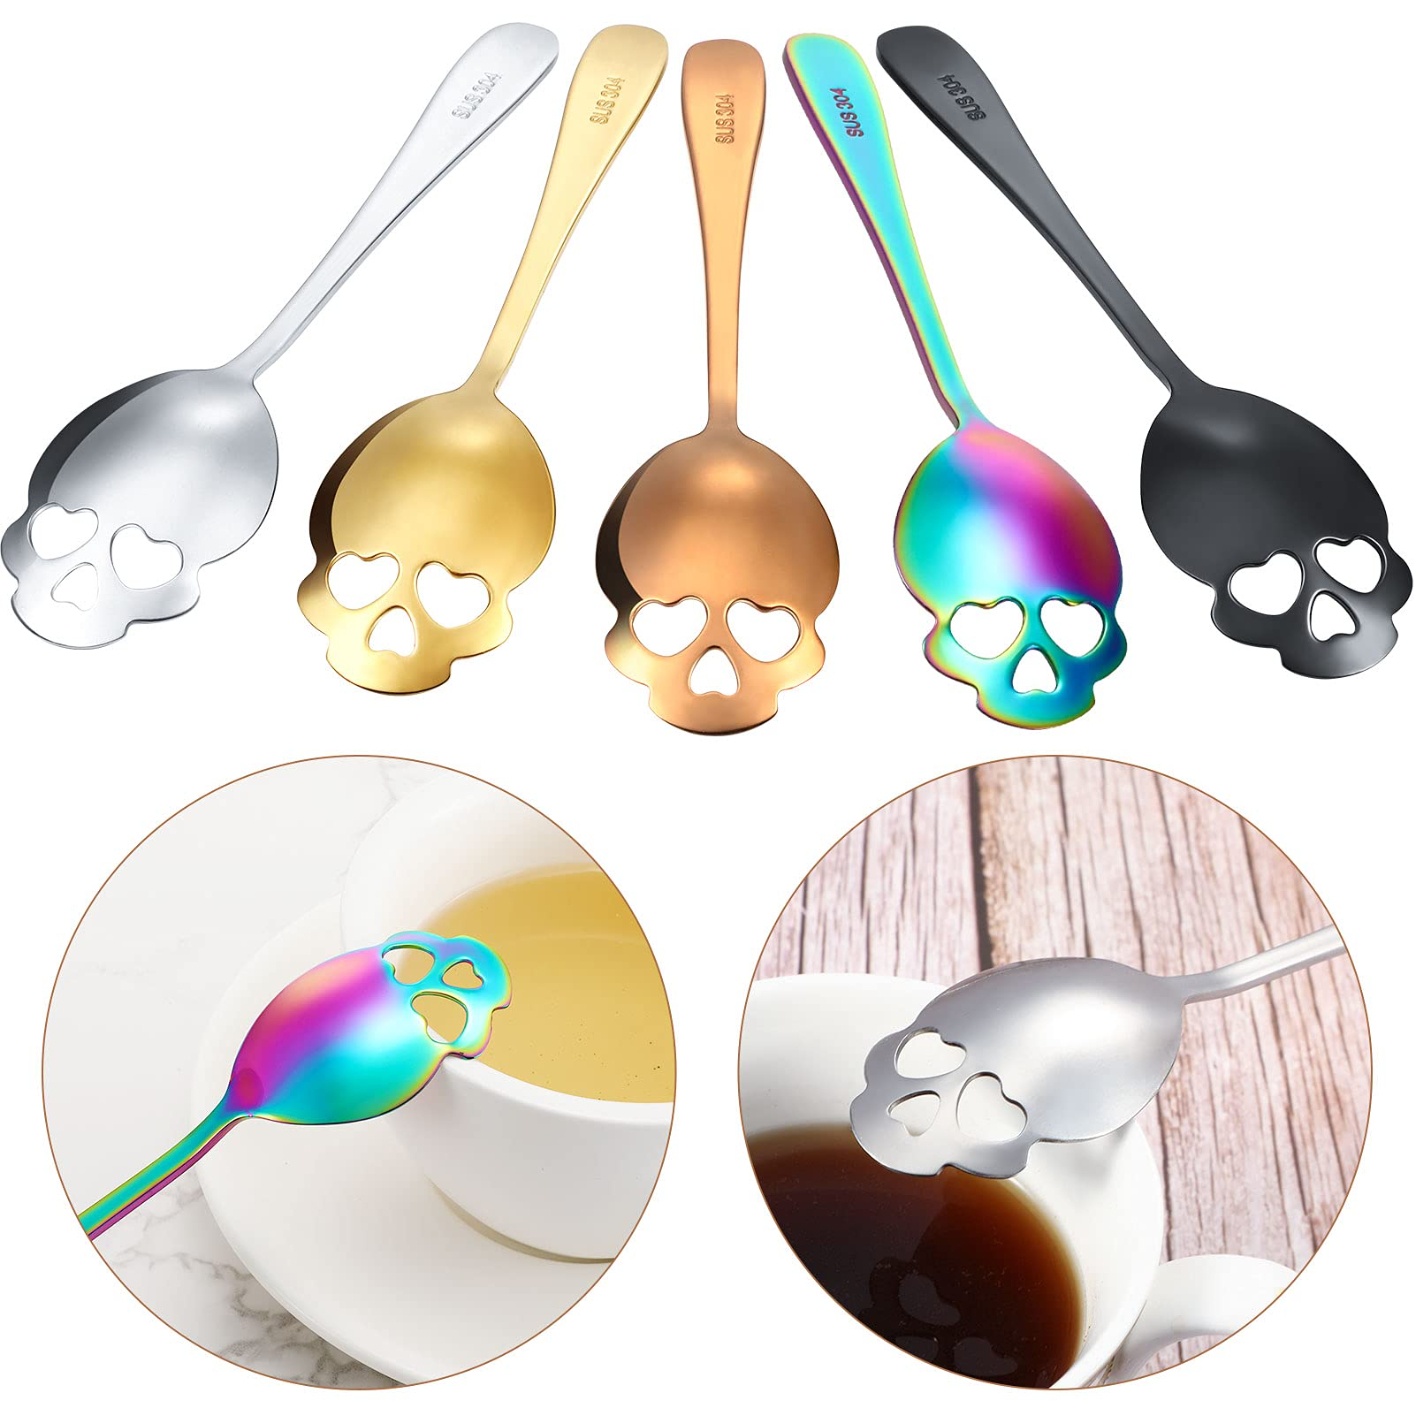 Q-2 Skull Spoons Stainless Steel Coffee and Espresso Spoons for Tea, Milk, Sugar Stirring, Dessert, Cake